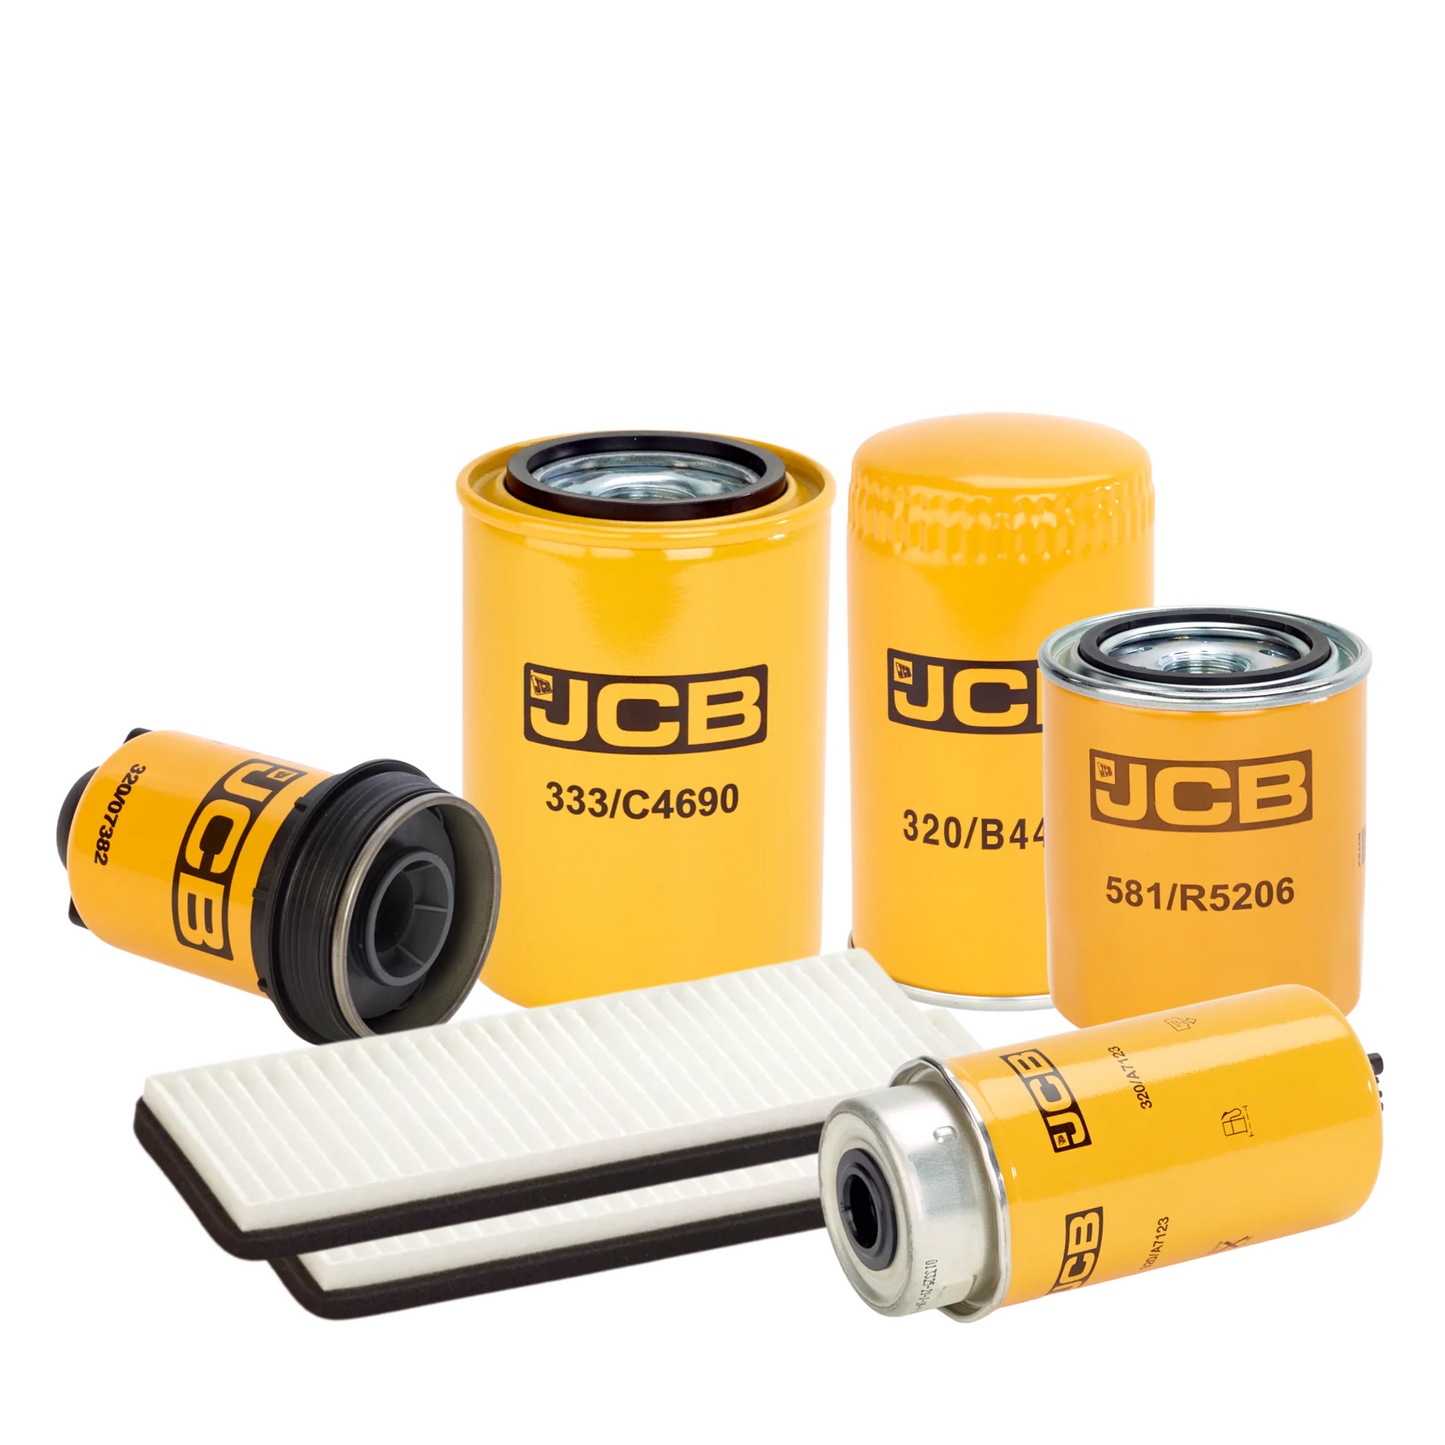 JCB 535-125 1500 Hour Filter Service Kit